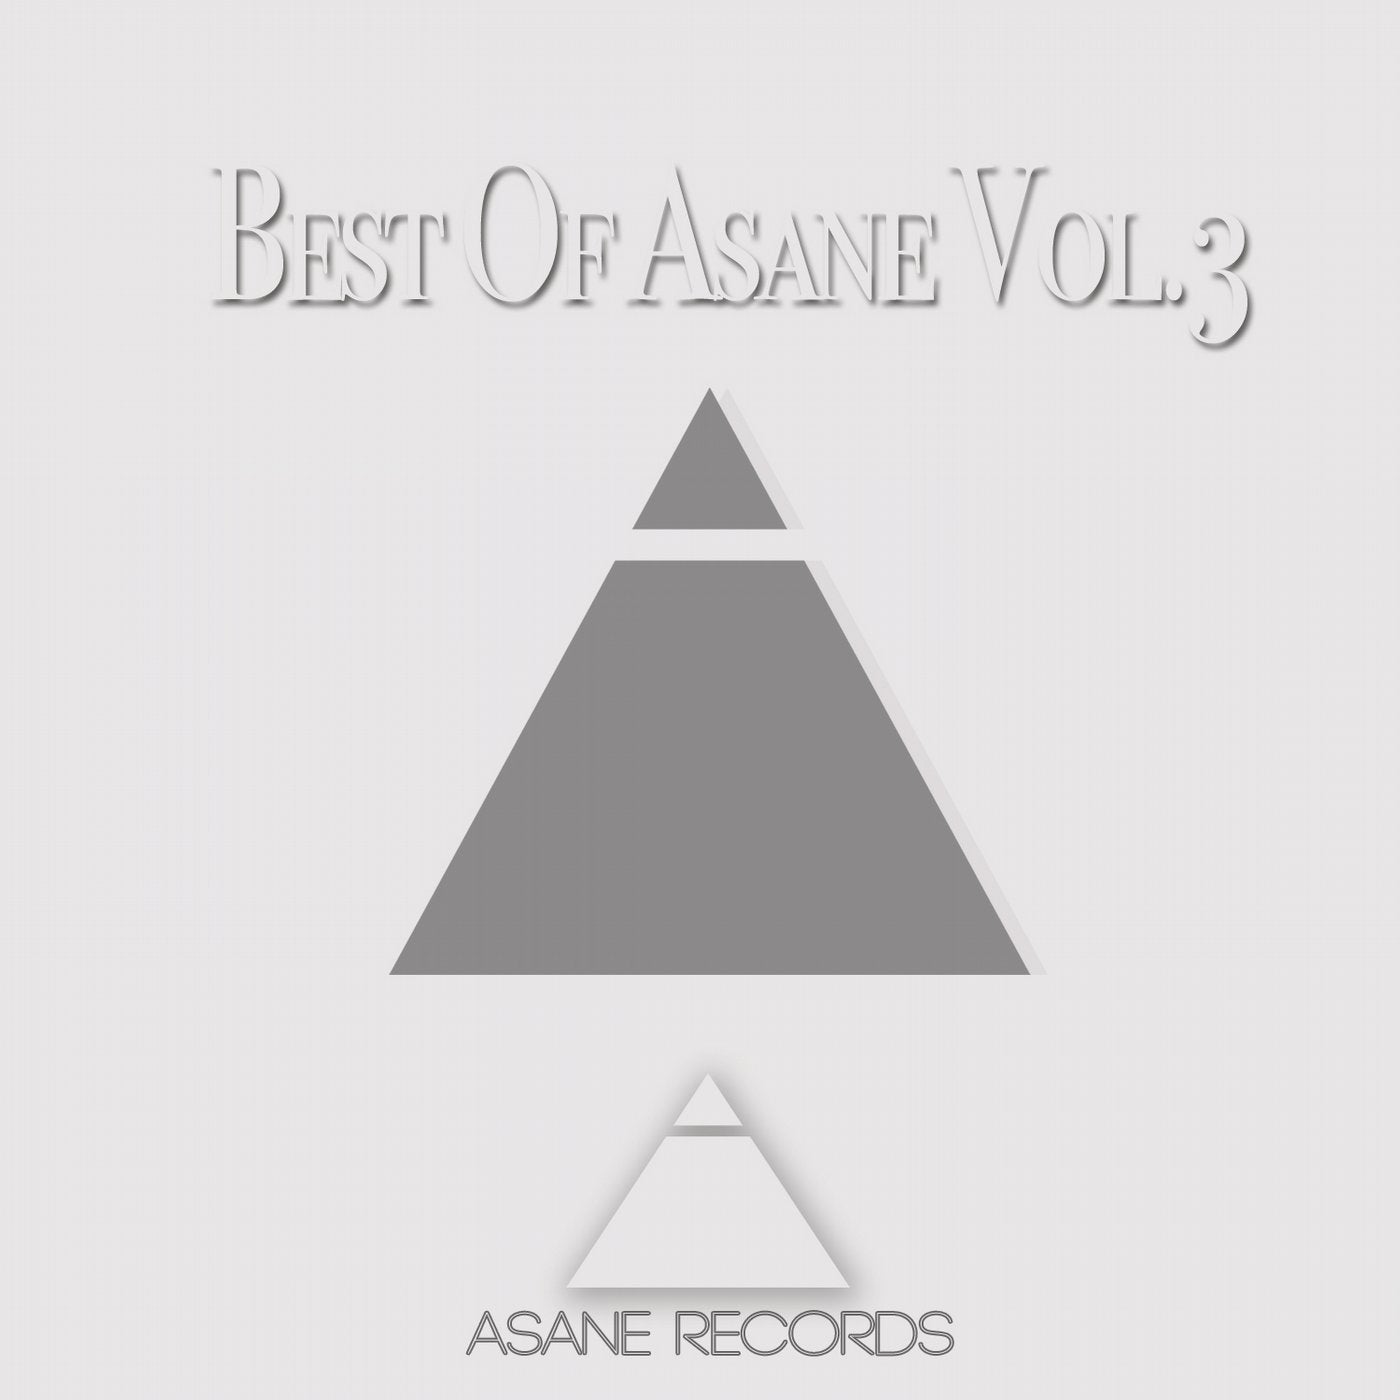 The Best Of Asane Vol.3